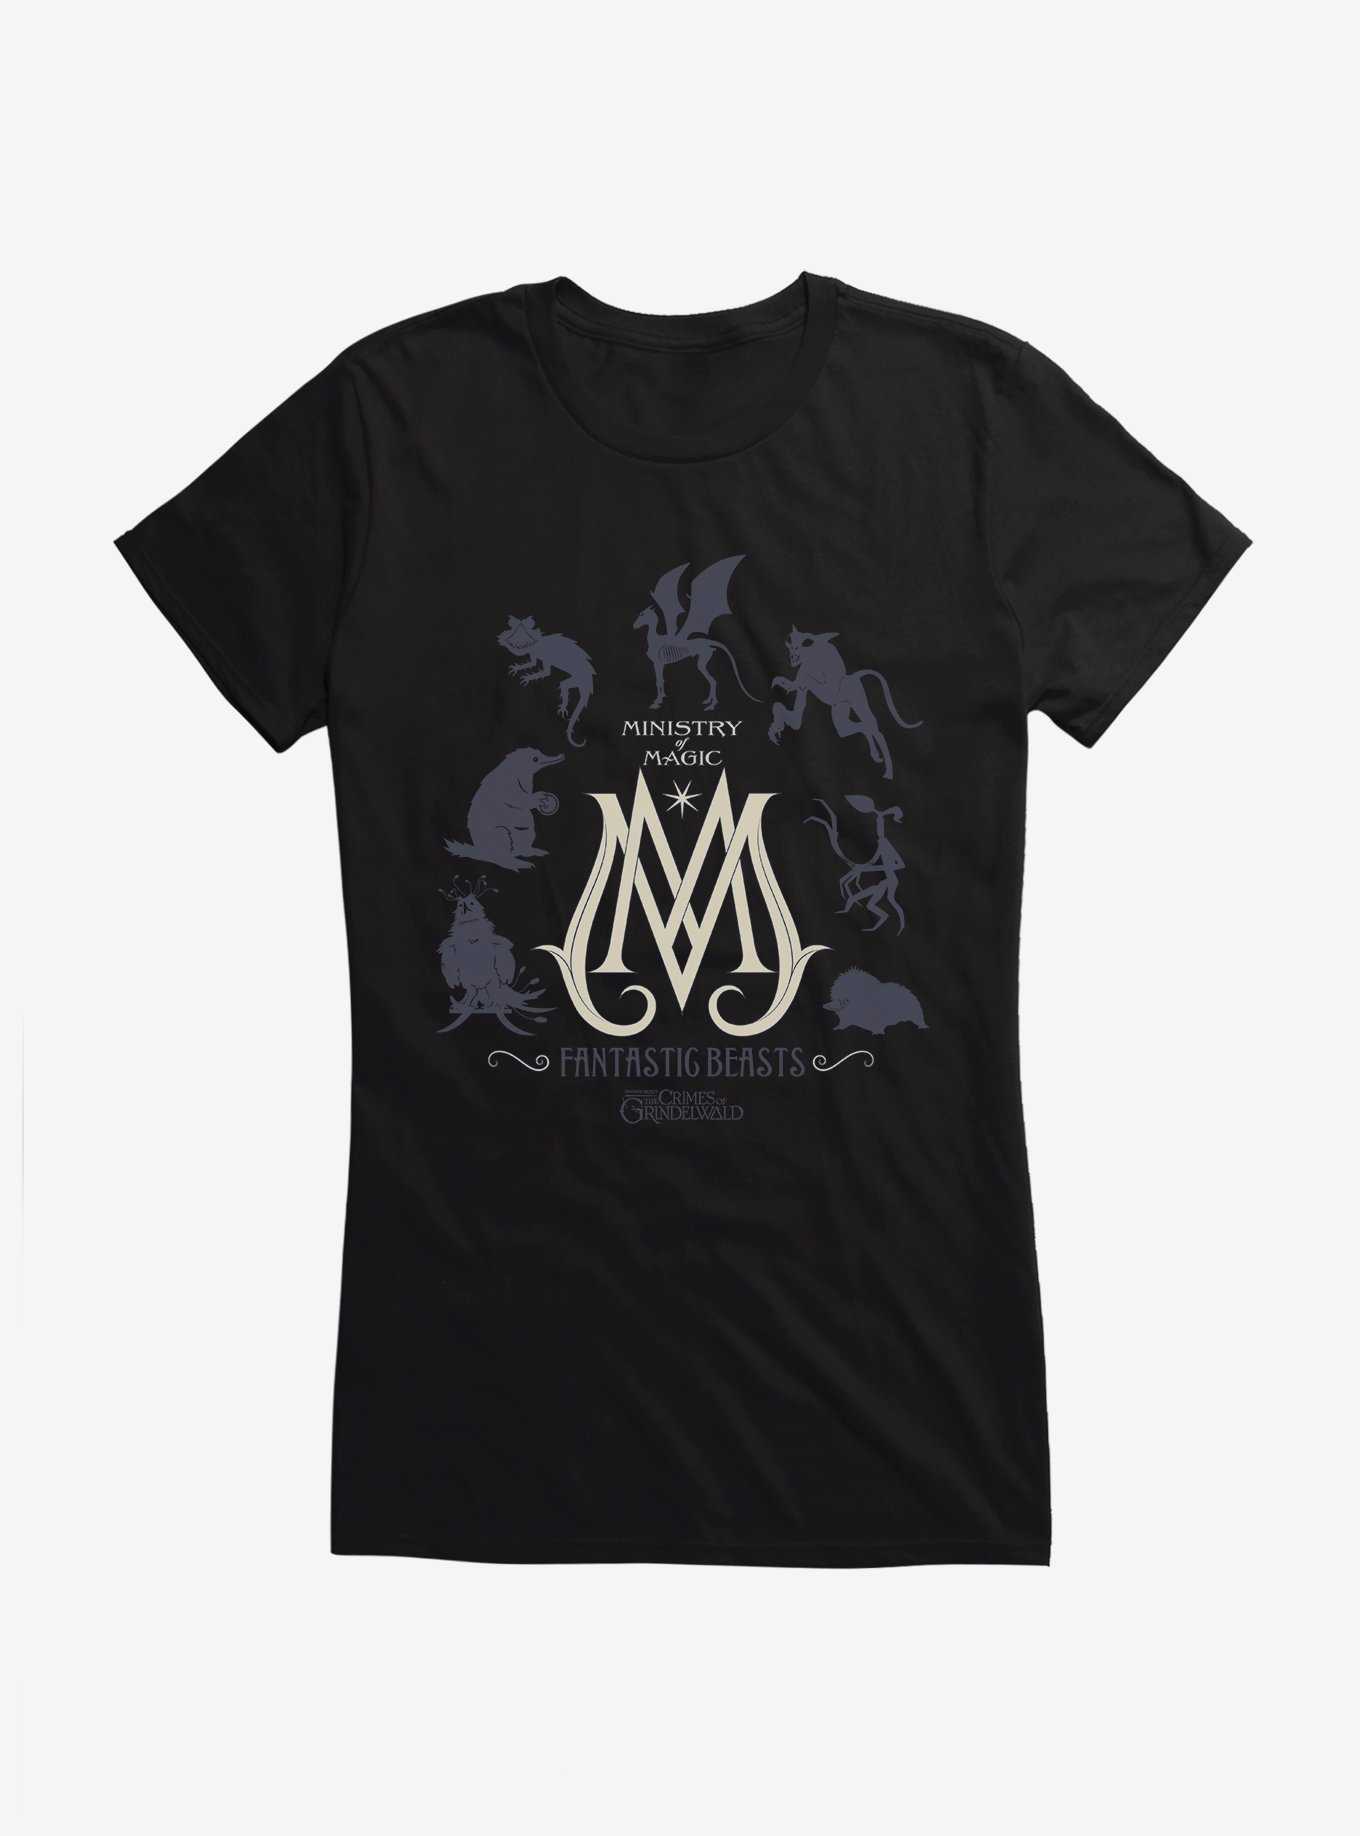 Fantastic Beasts Ministry of Magic Girls T-Shirt, , hi-res